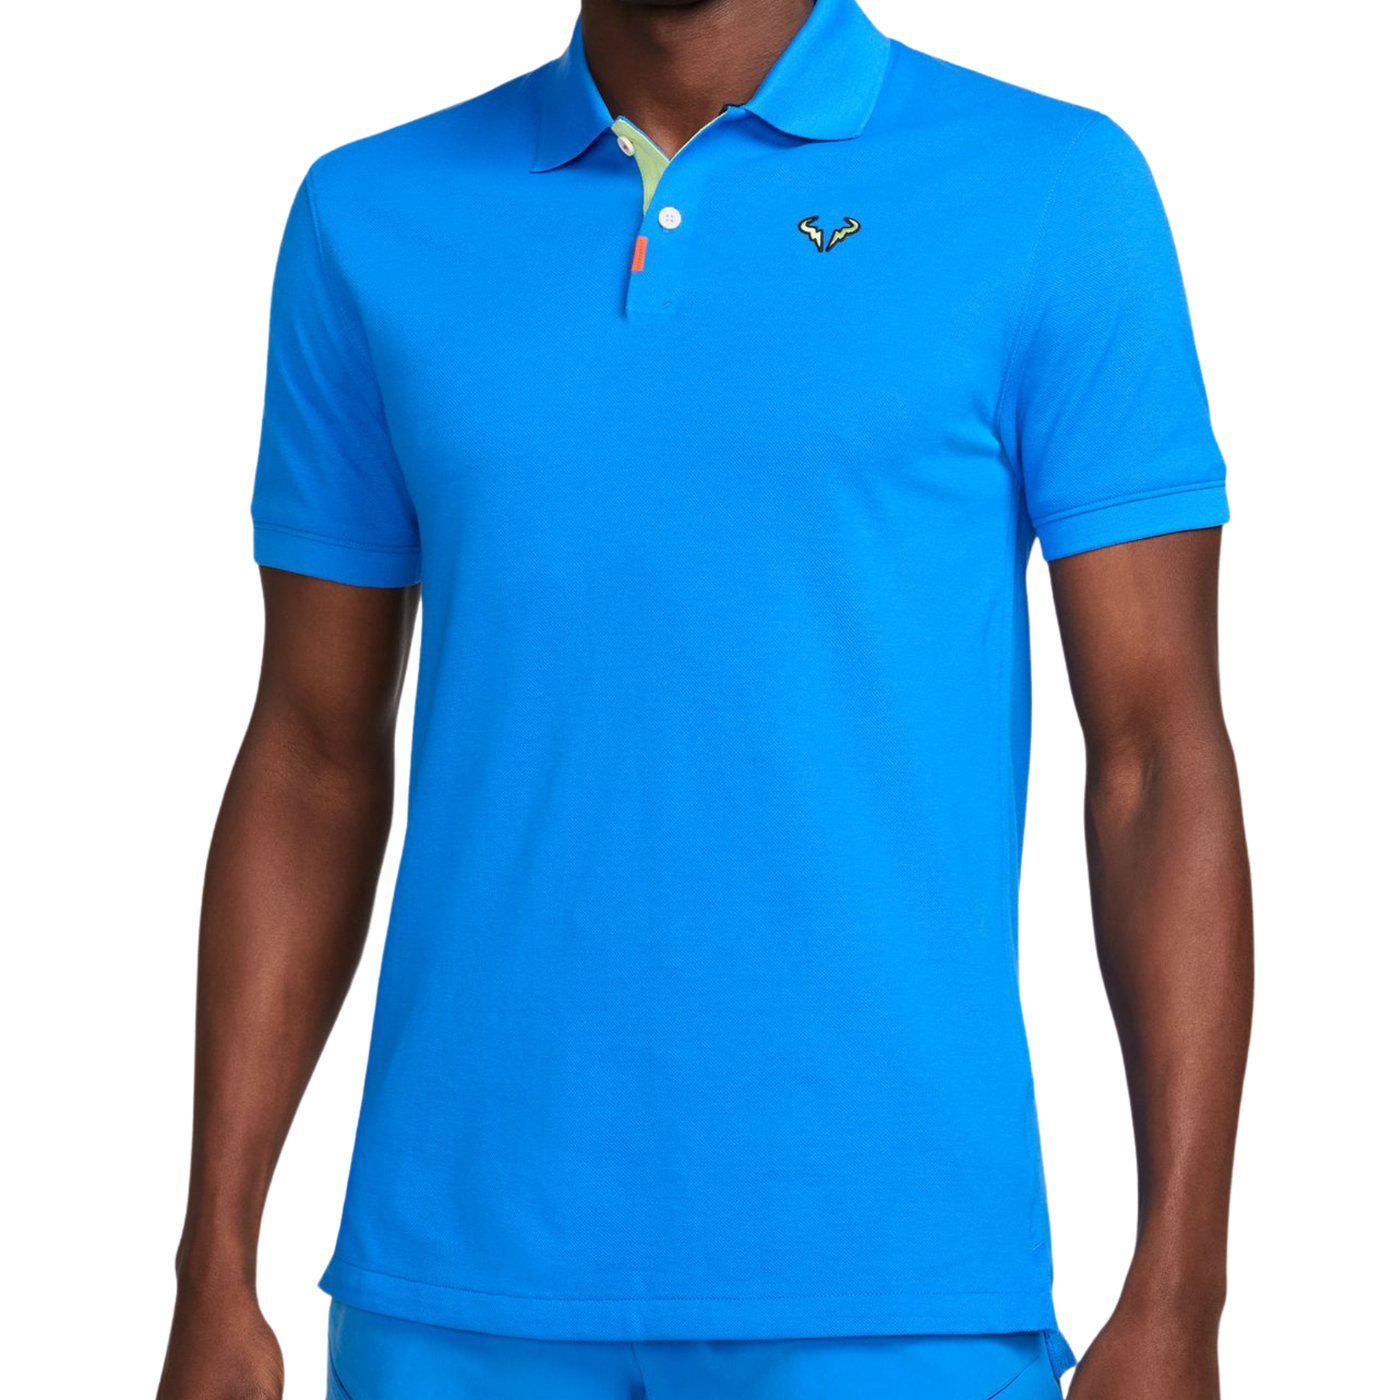 Nike Rafael Nadal Men Slim-Fit Tennis Polo Shirt - Lt Photo Blue/Lt Lemon Twist